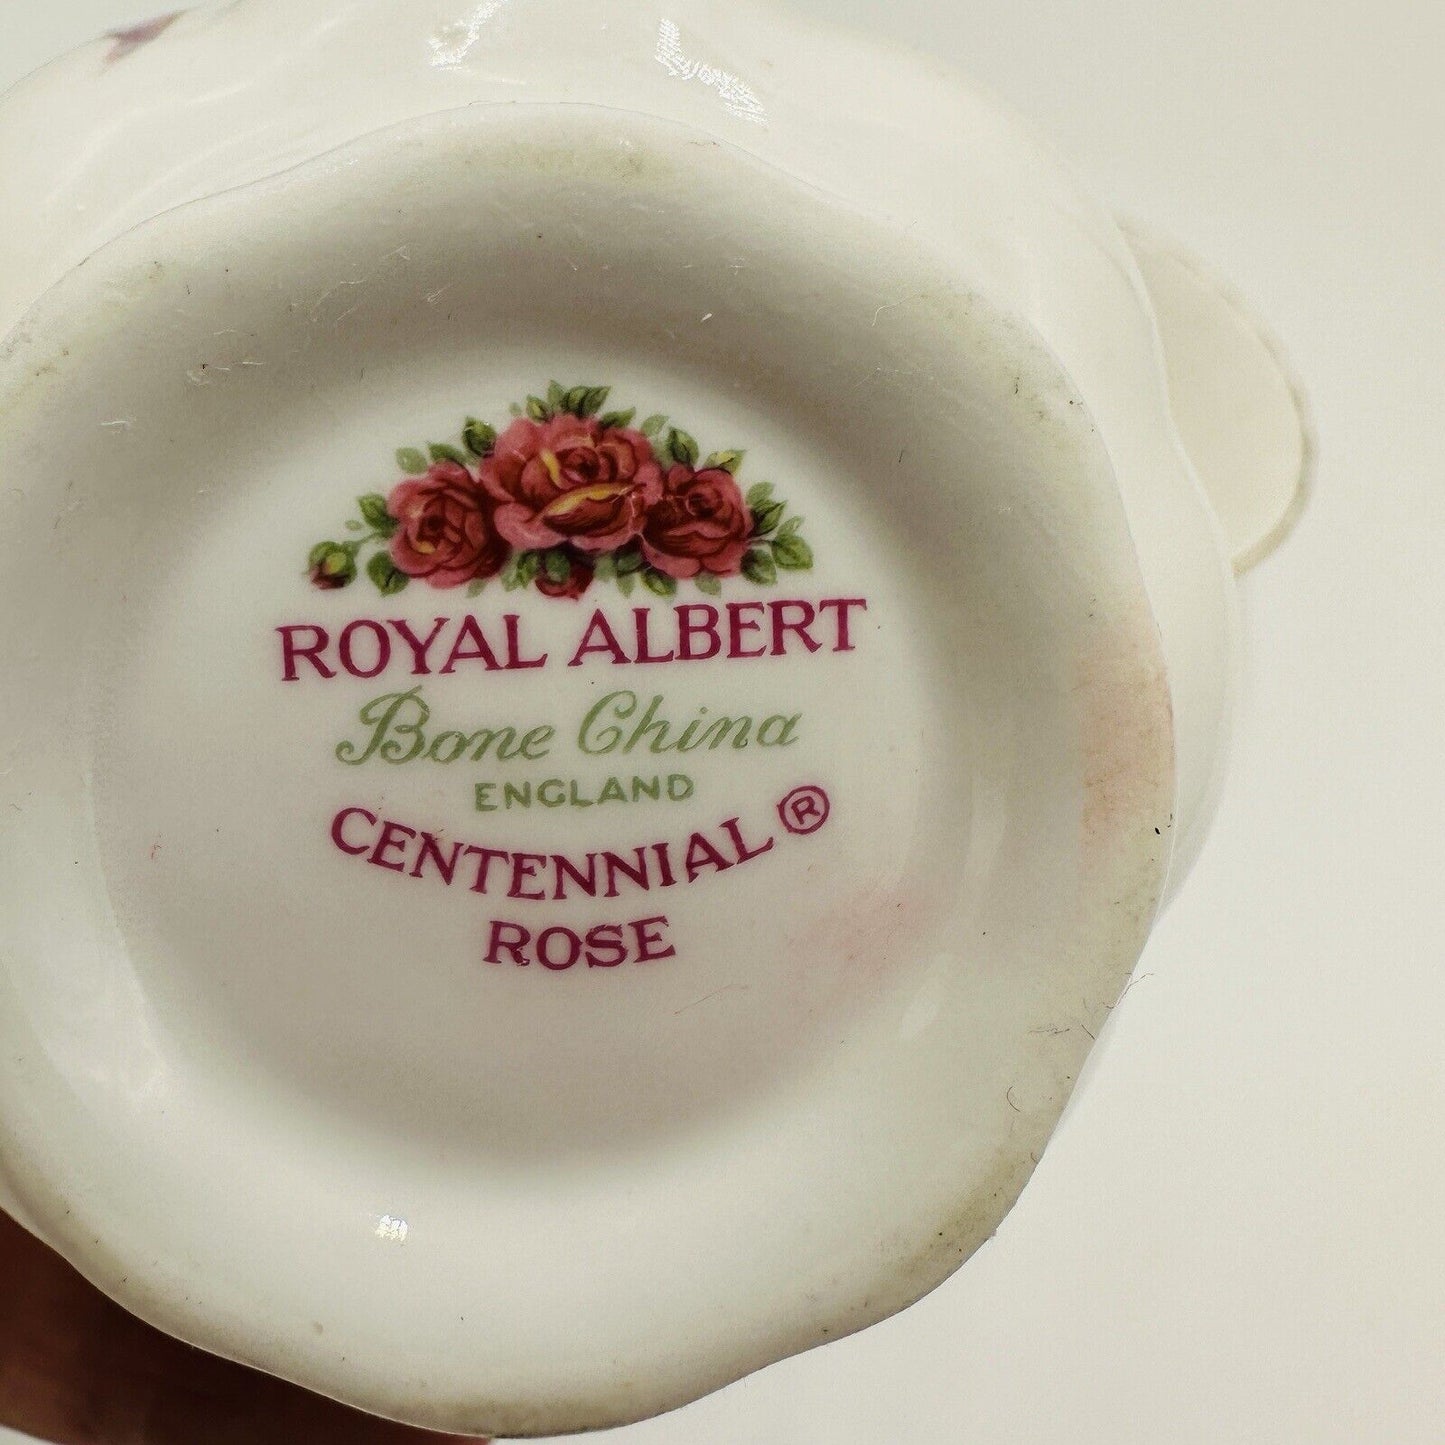 ROYAL ALBERT "Centennial Rose" Vintage Cream and Suger Set  bone china vintage